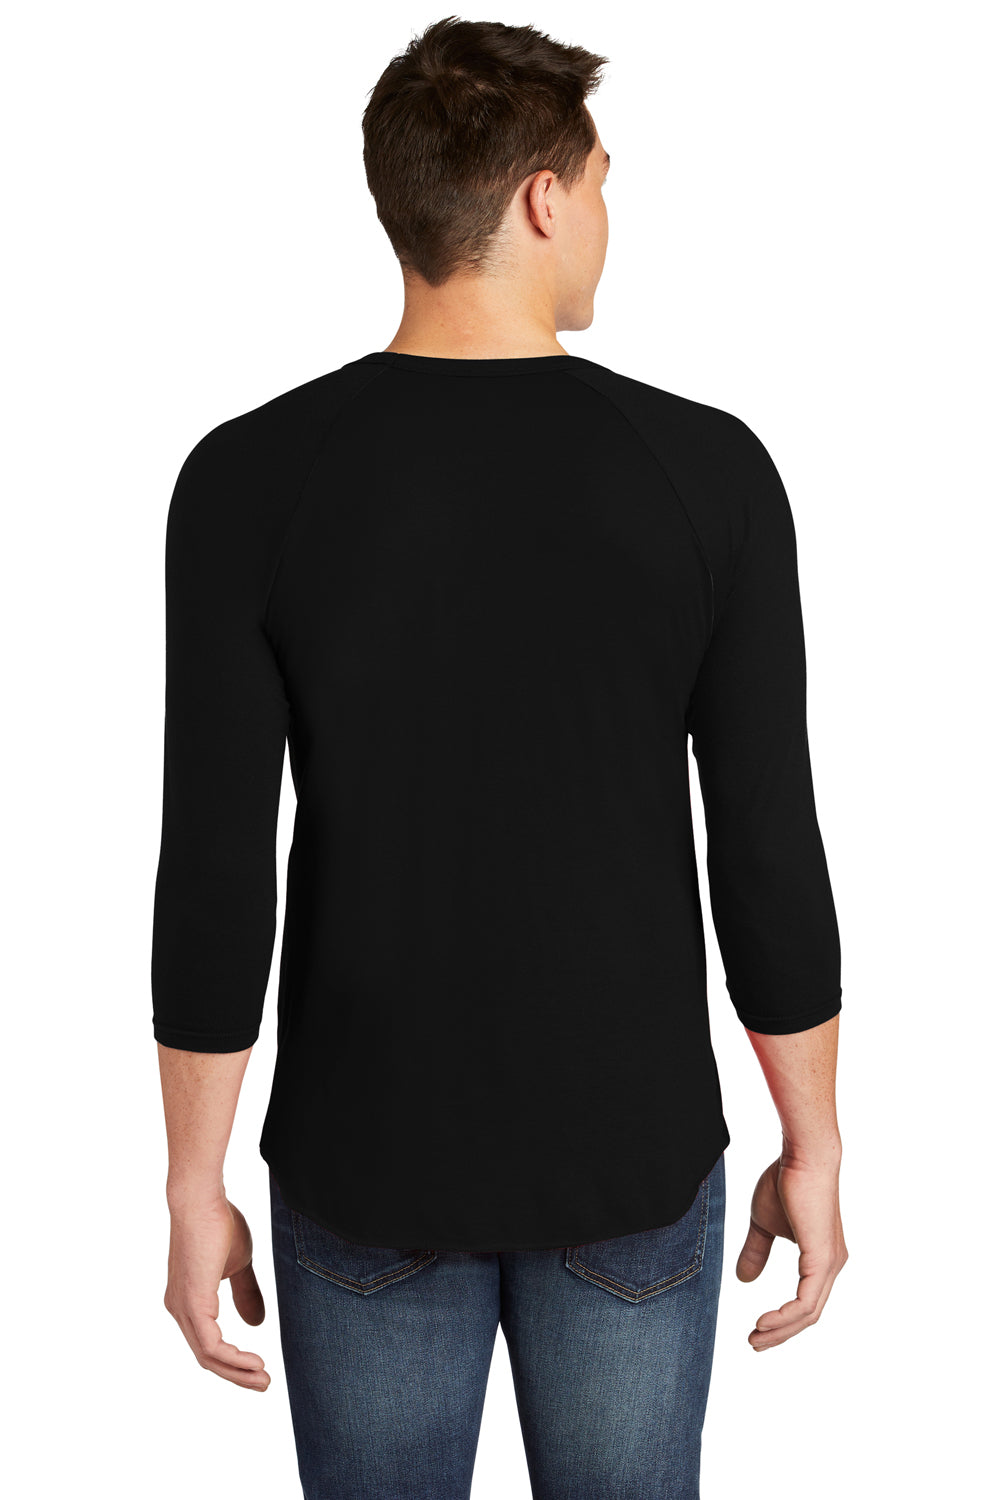 American Apparel BB453W Mens 3/4 Sleeve Crewneck T-Shirt Black Back